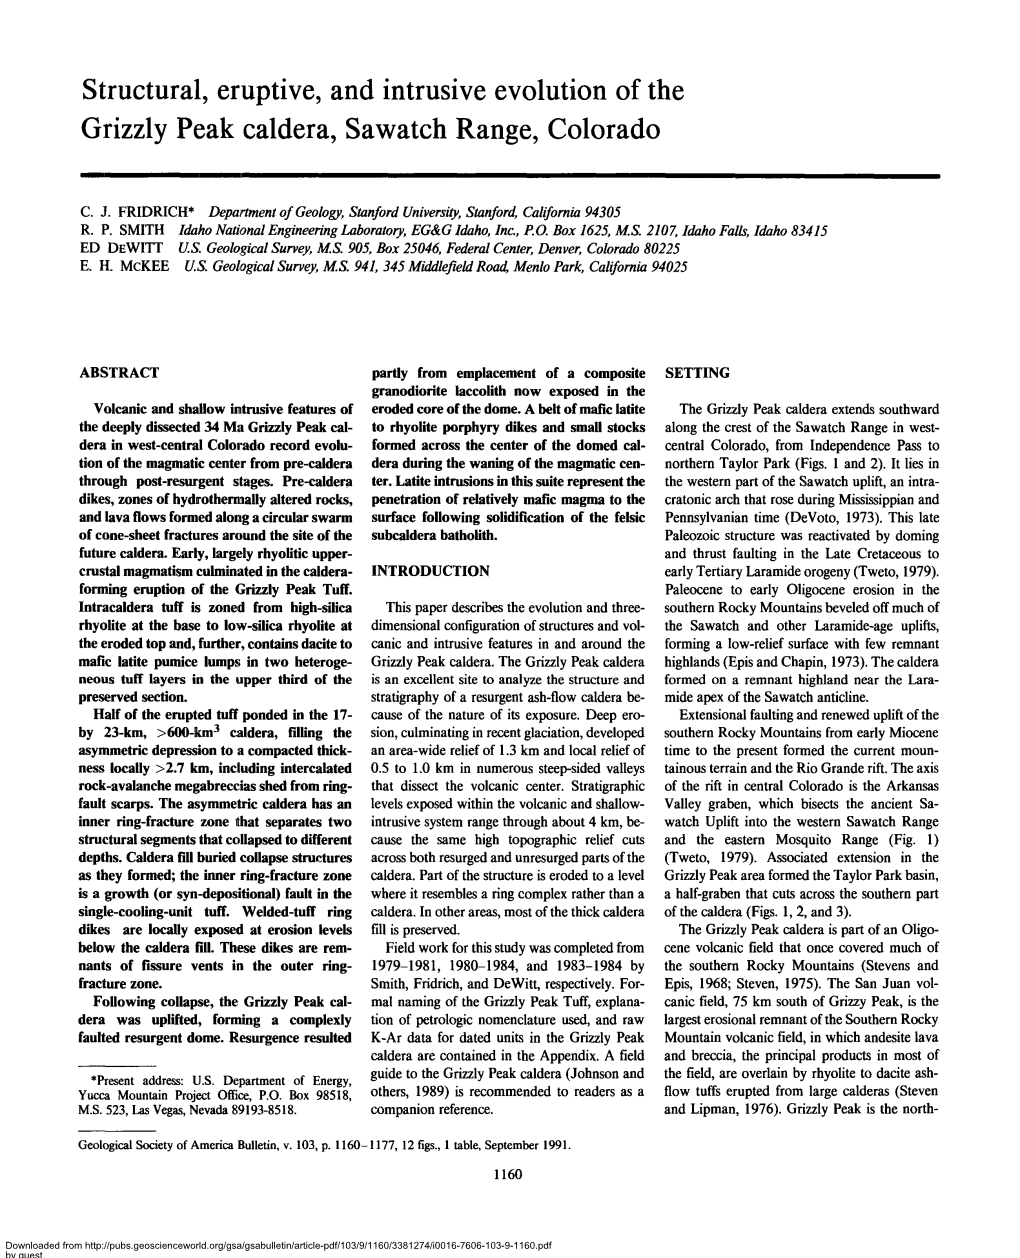 Structural, Eruptive, and Intrusive Evolution of the Grizzly Peak Caldera, Sawatch Range, Colorado